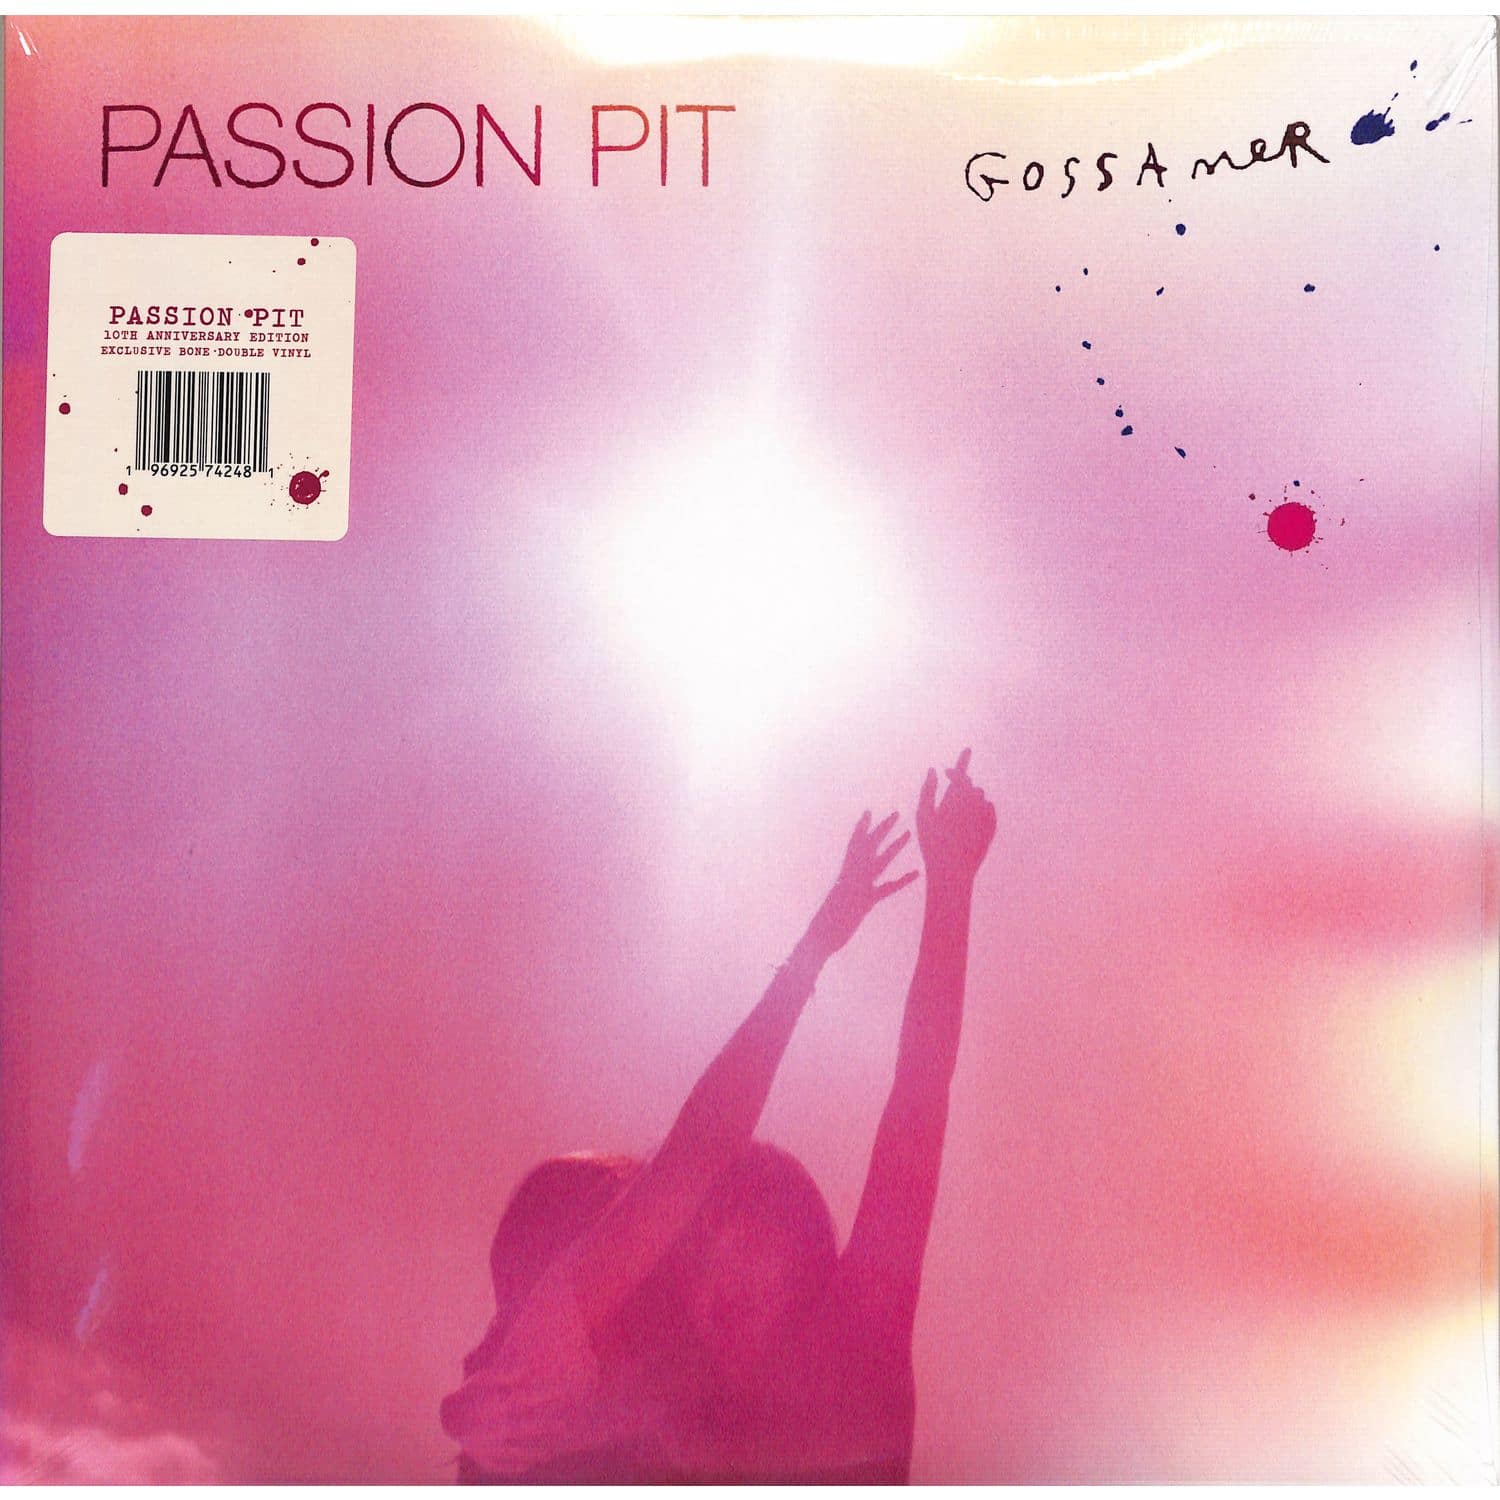 Passion Pit - GOSSAMER 